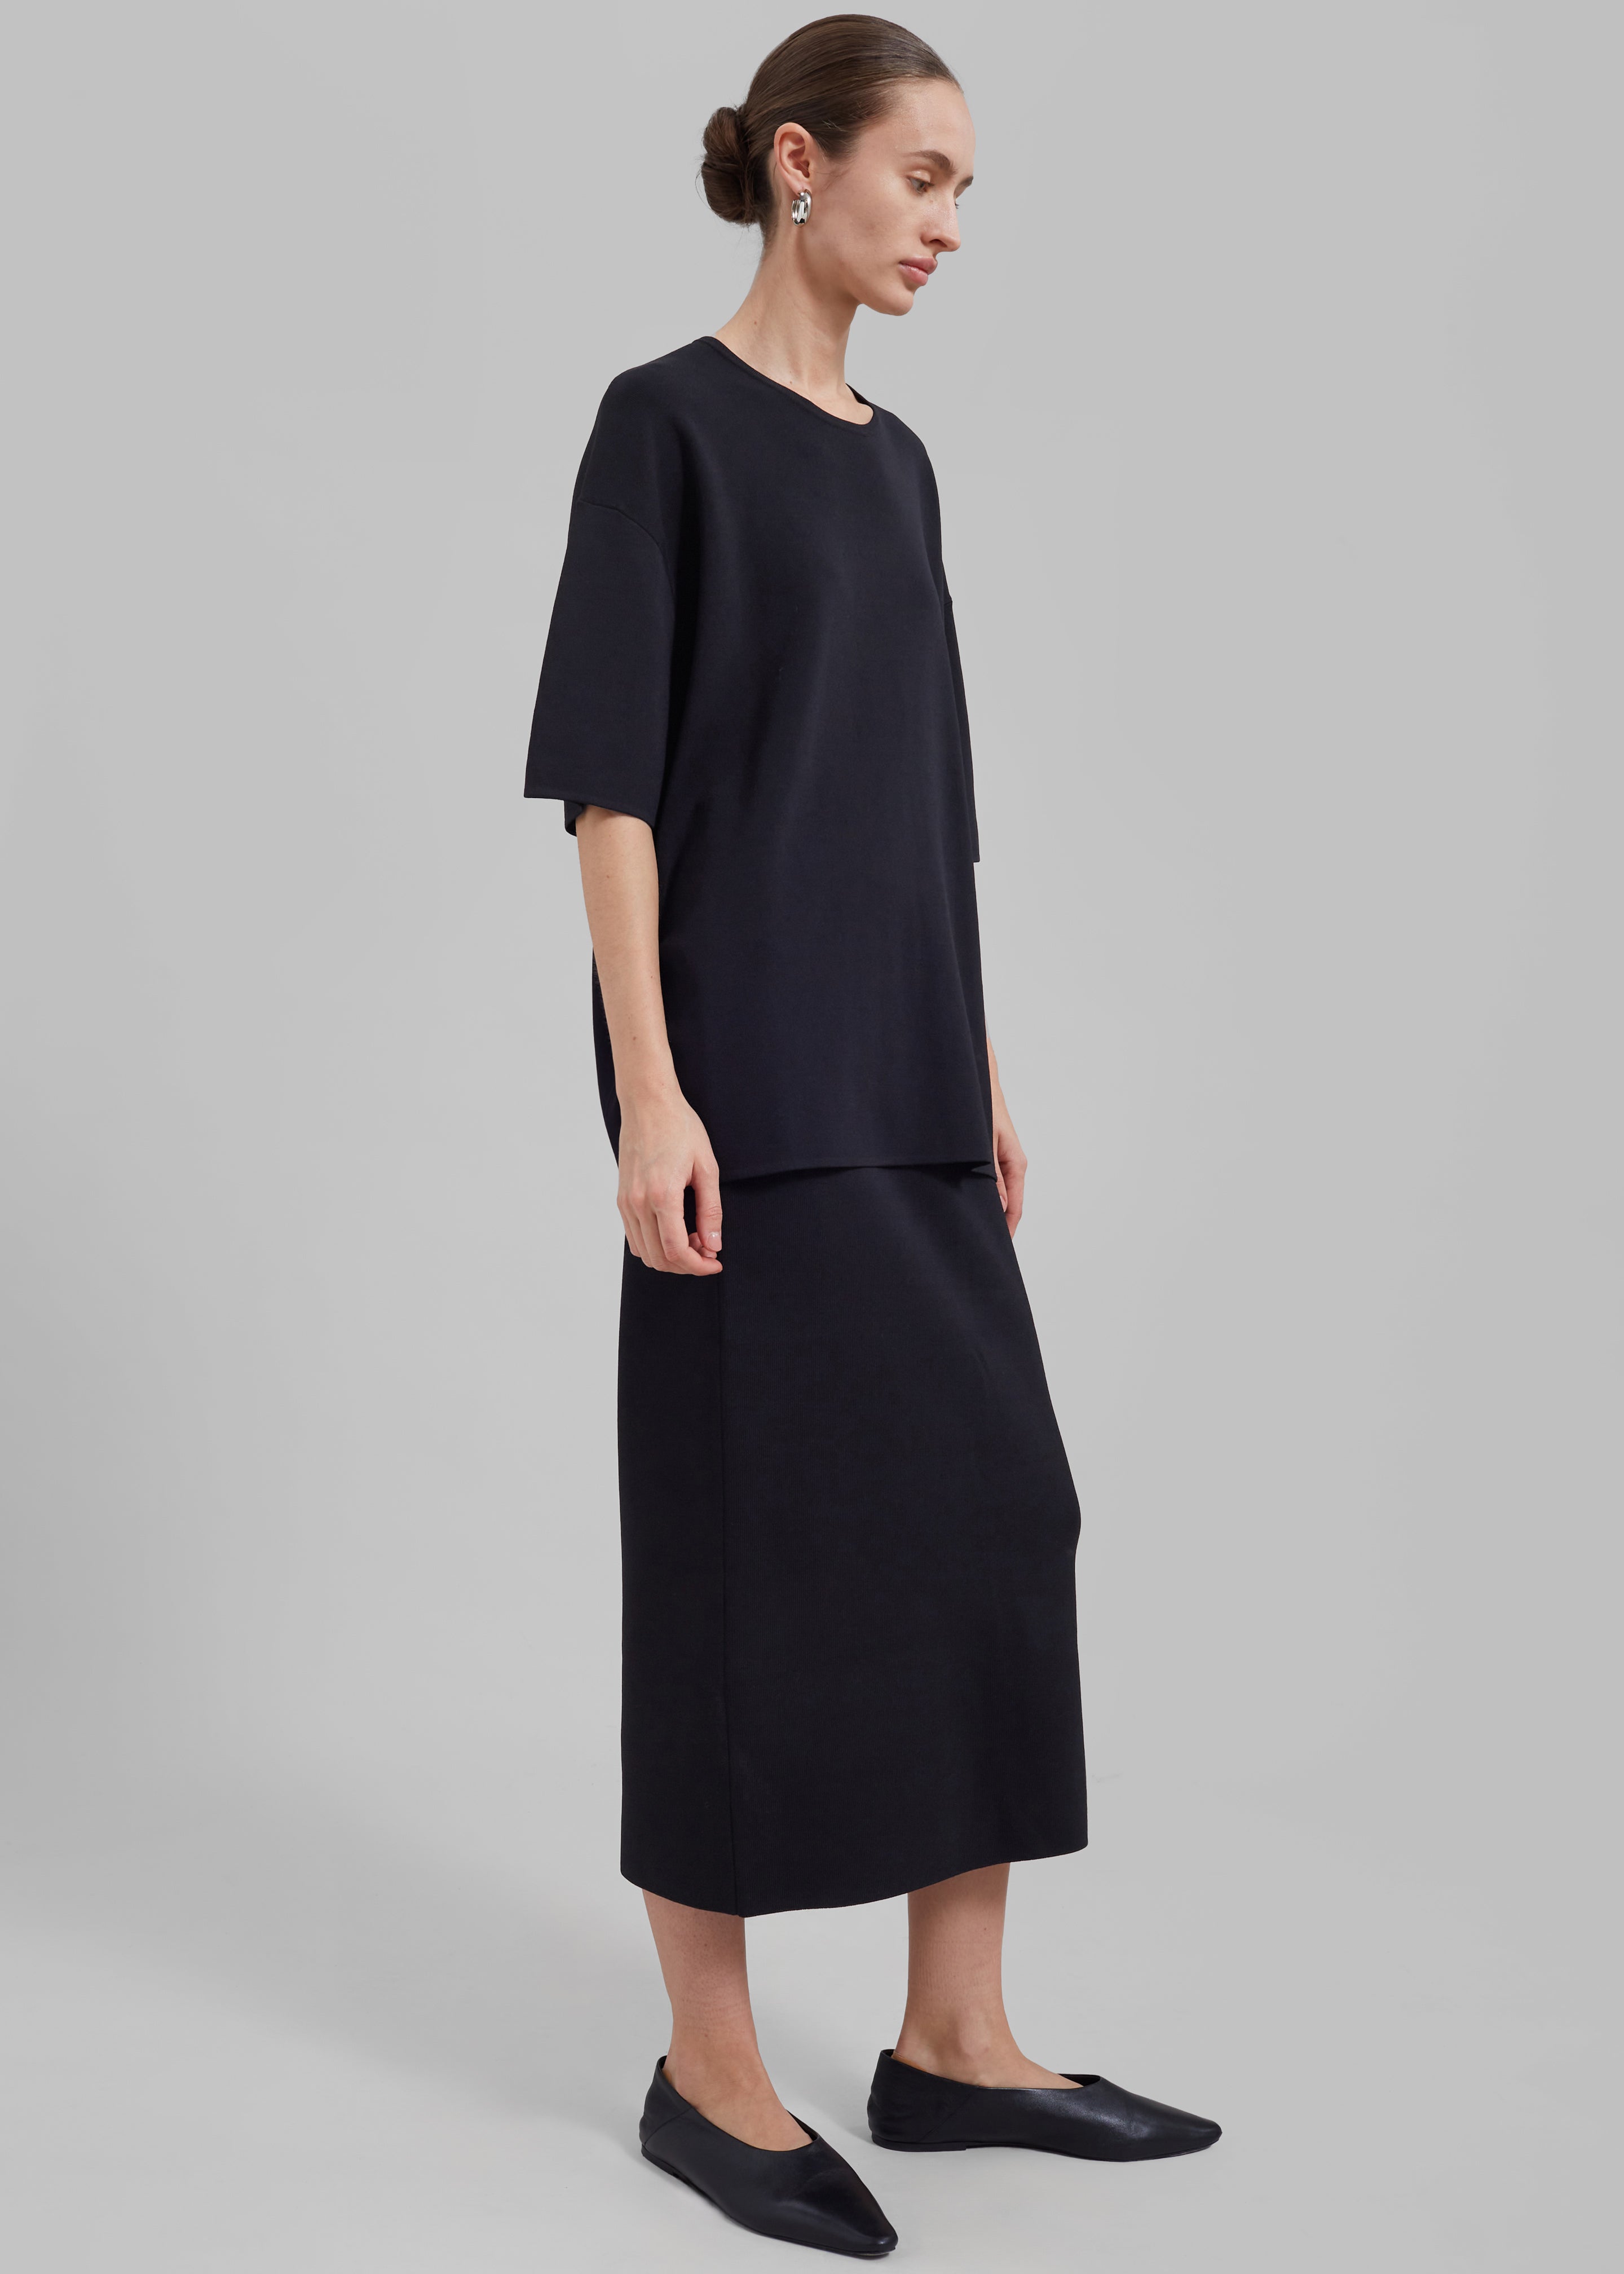 Solange Knit Pencil Skirt - Black - 8